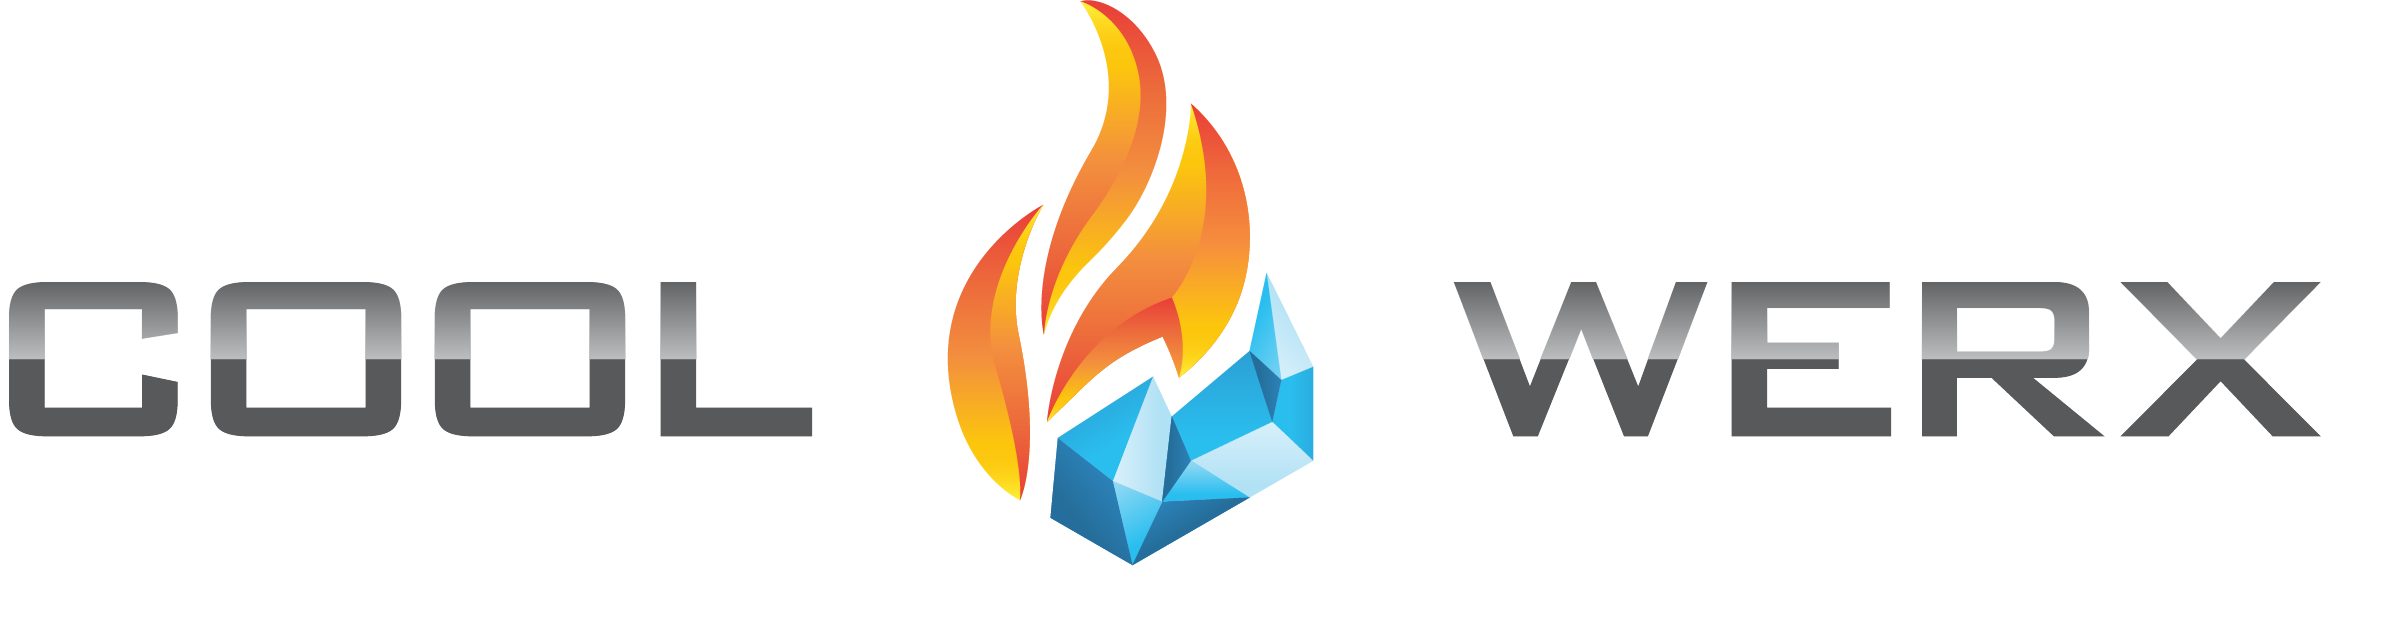 Cool Werx Logo